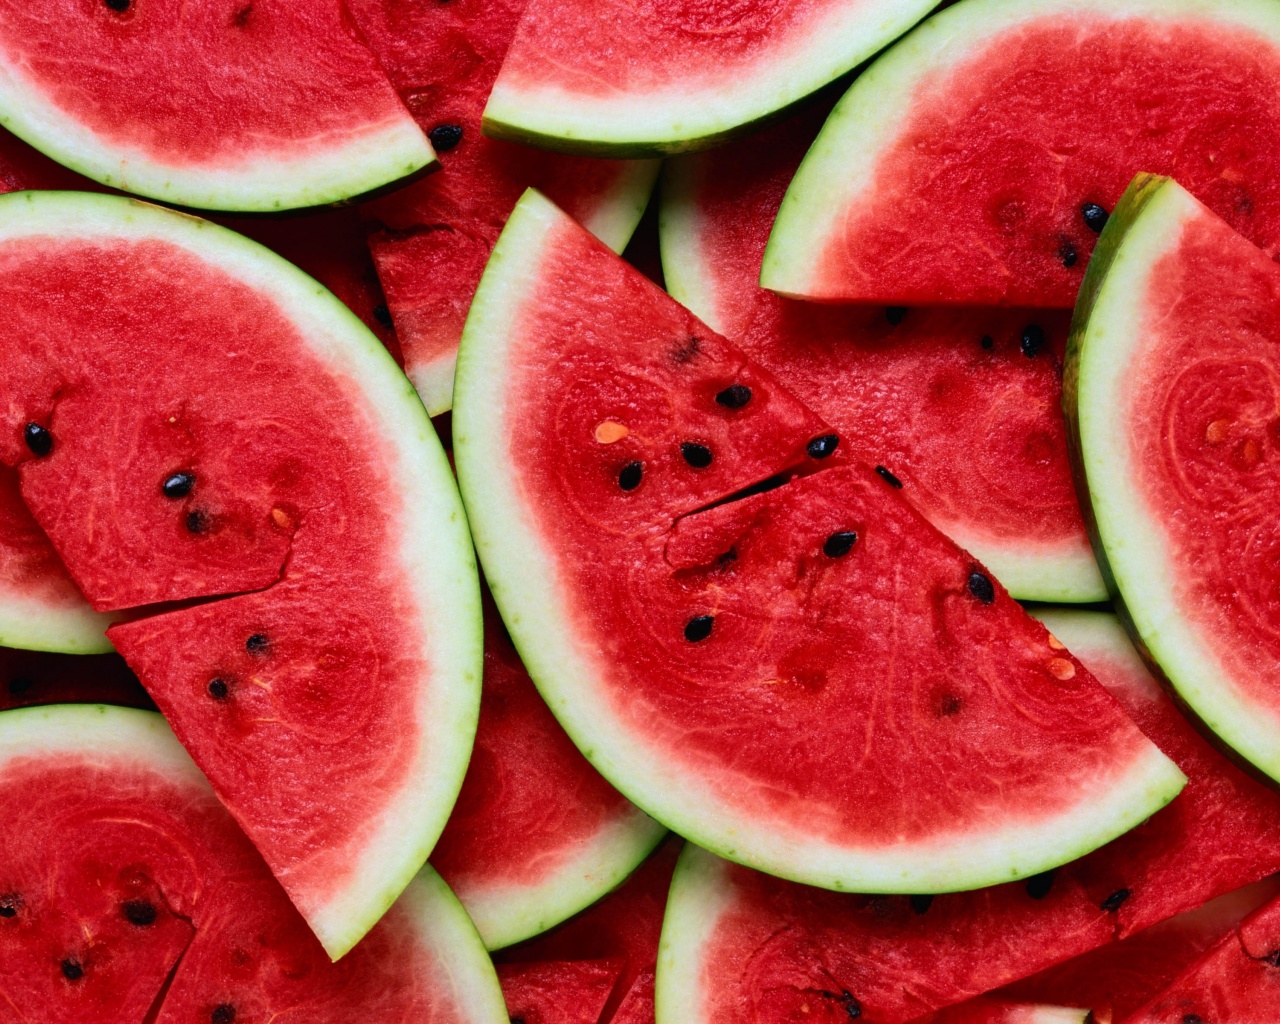 Sliced Watermelon